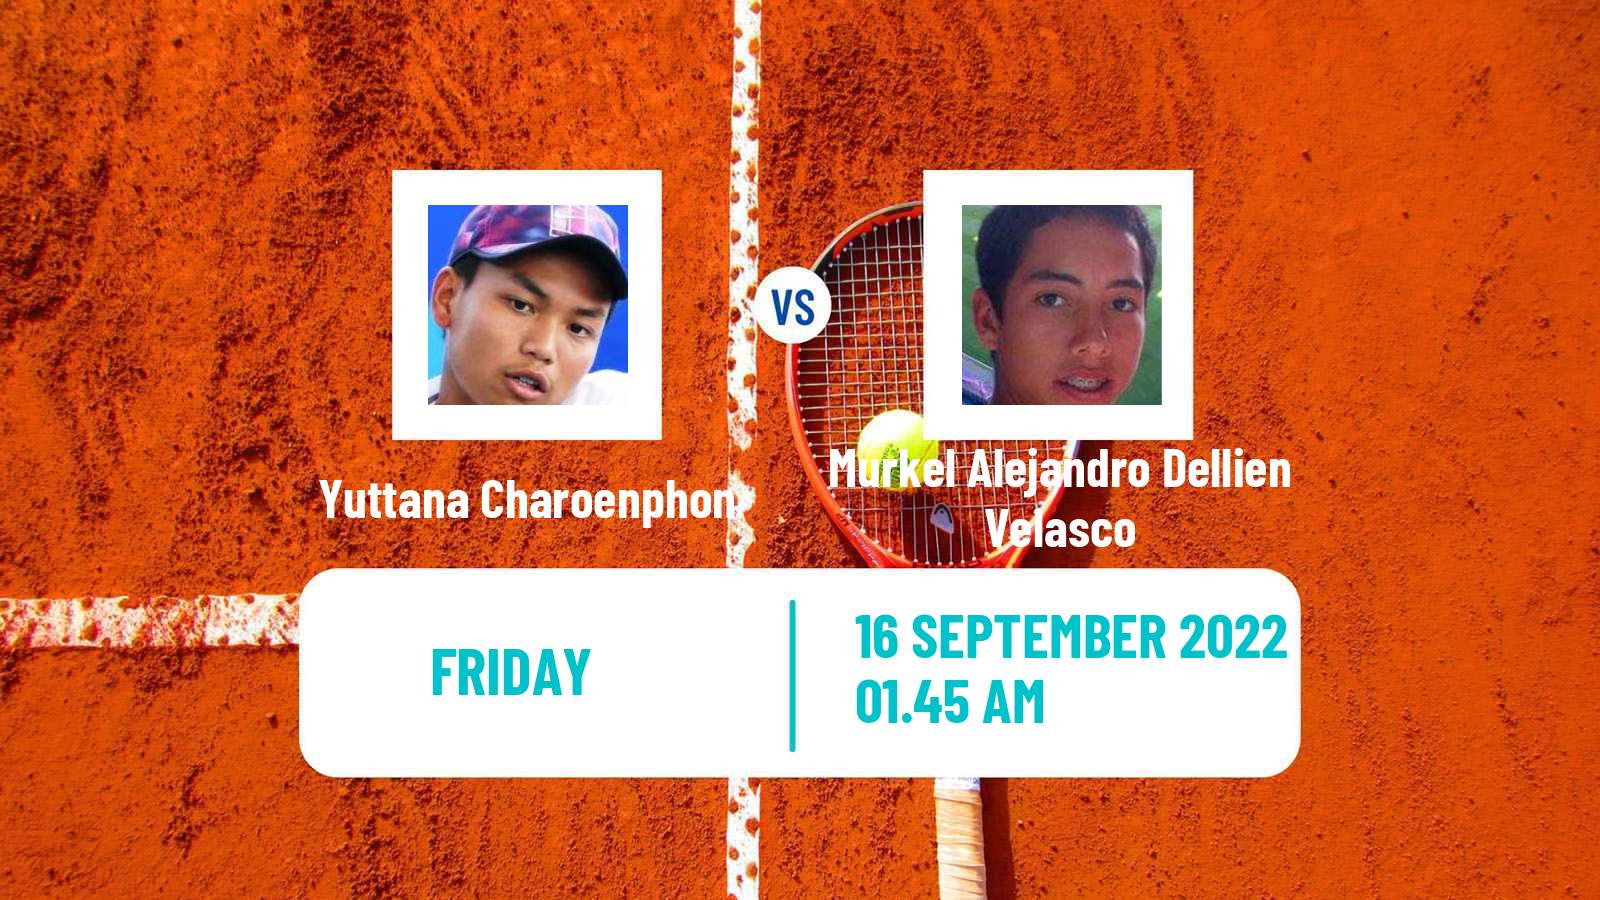 Tennis Davis Cup World Group II Yuttana Charoenphon - Murkel Alejandro Dellien Velasco